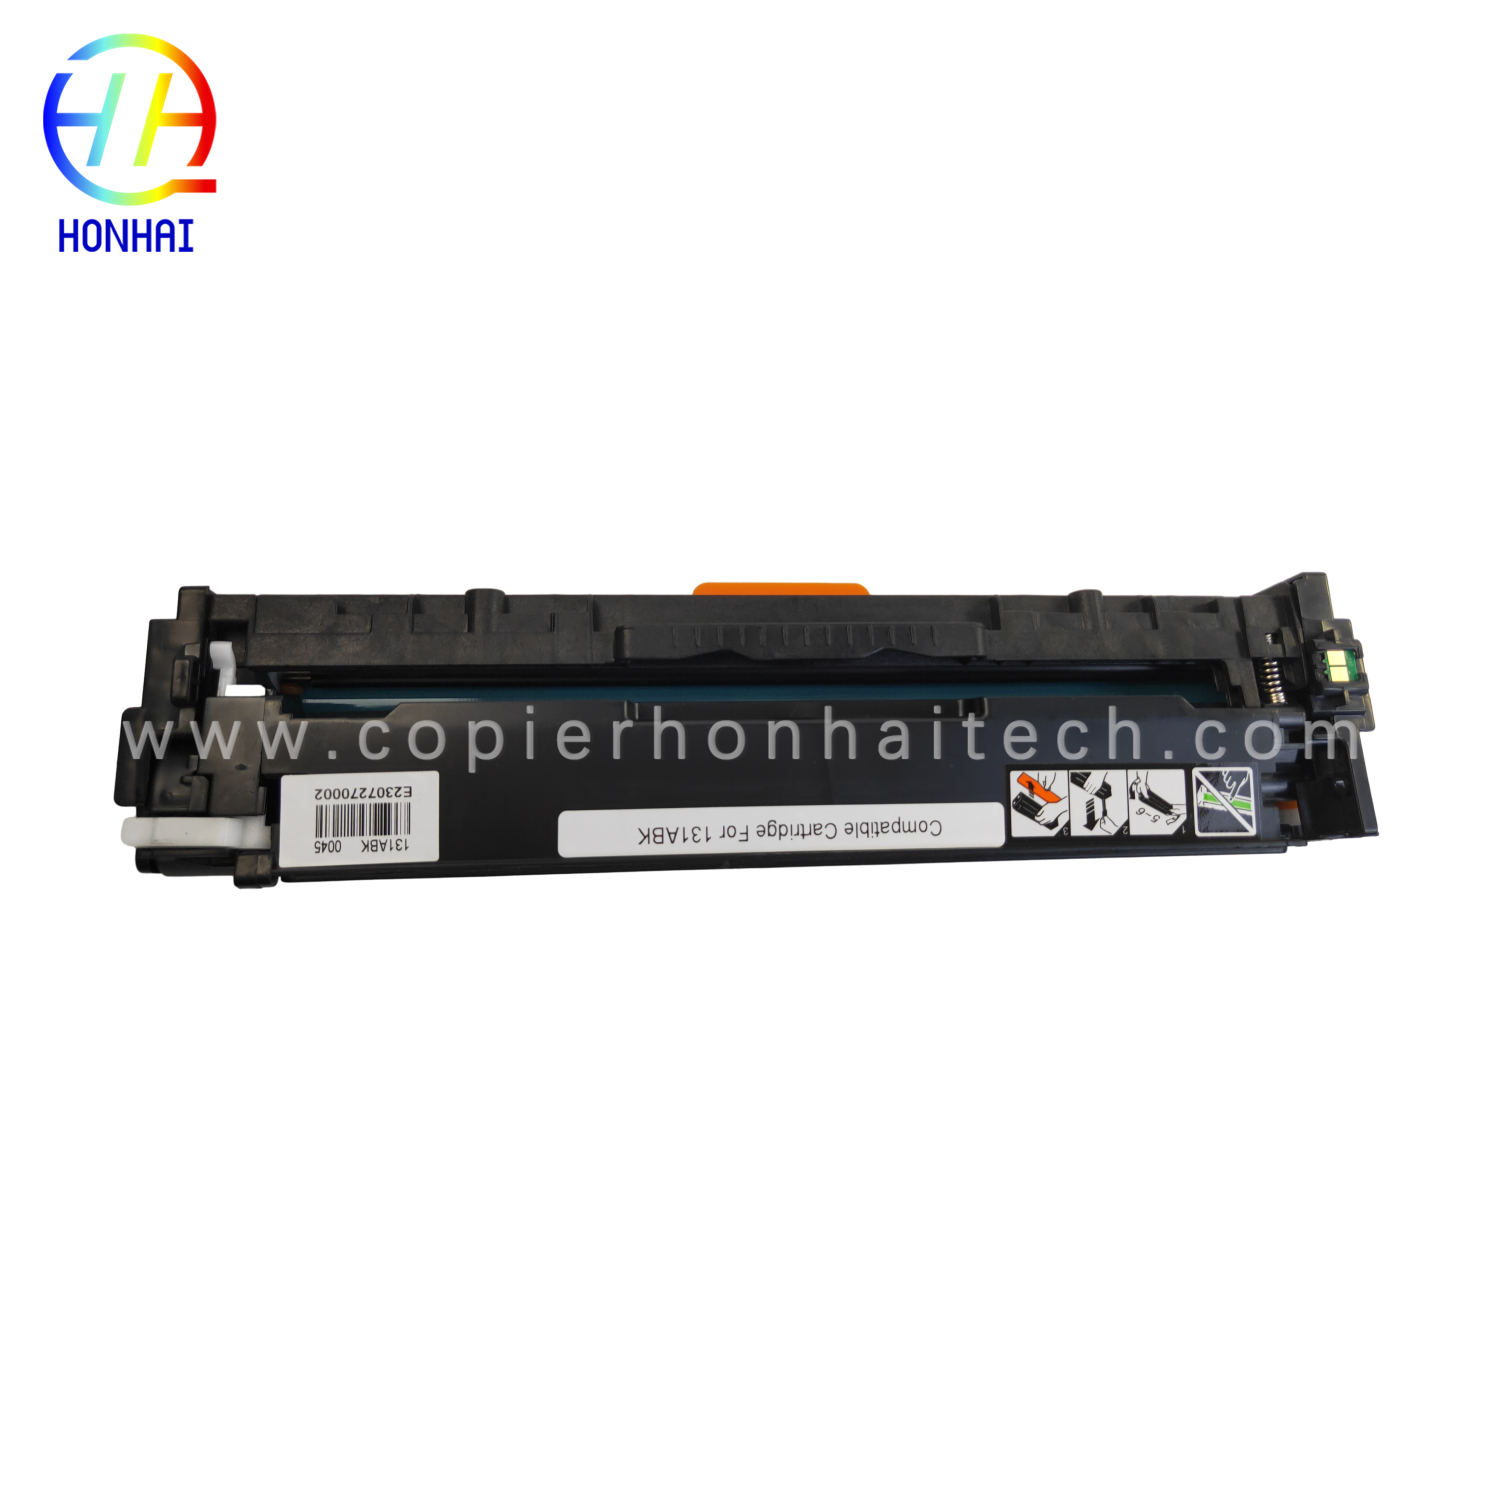 https://www.copierhonhaitech.com/toner-cartridge-for-hp-laserjet-pro-200-color-m251nw-mfp-m276nw-cf212a-cf213a-product/